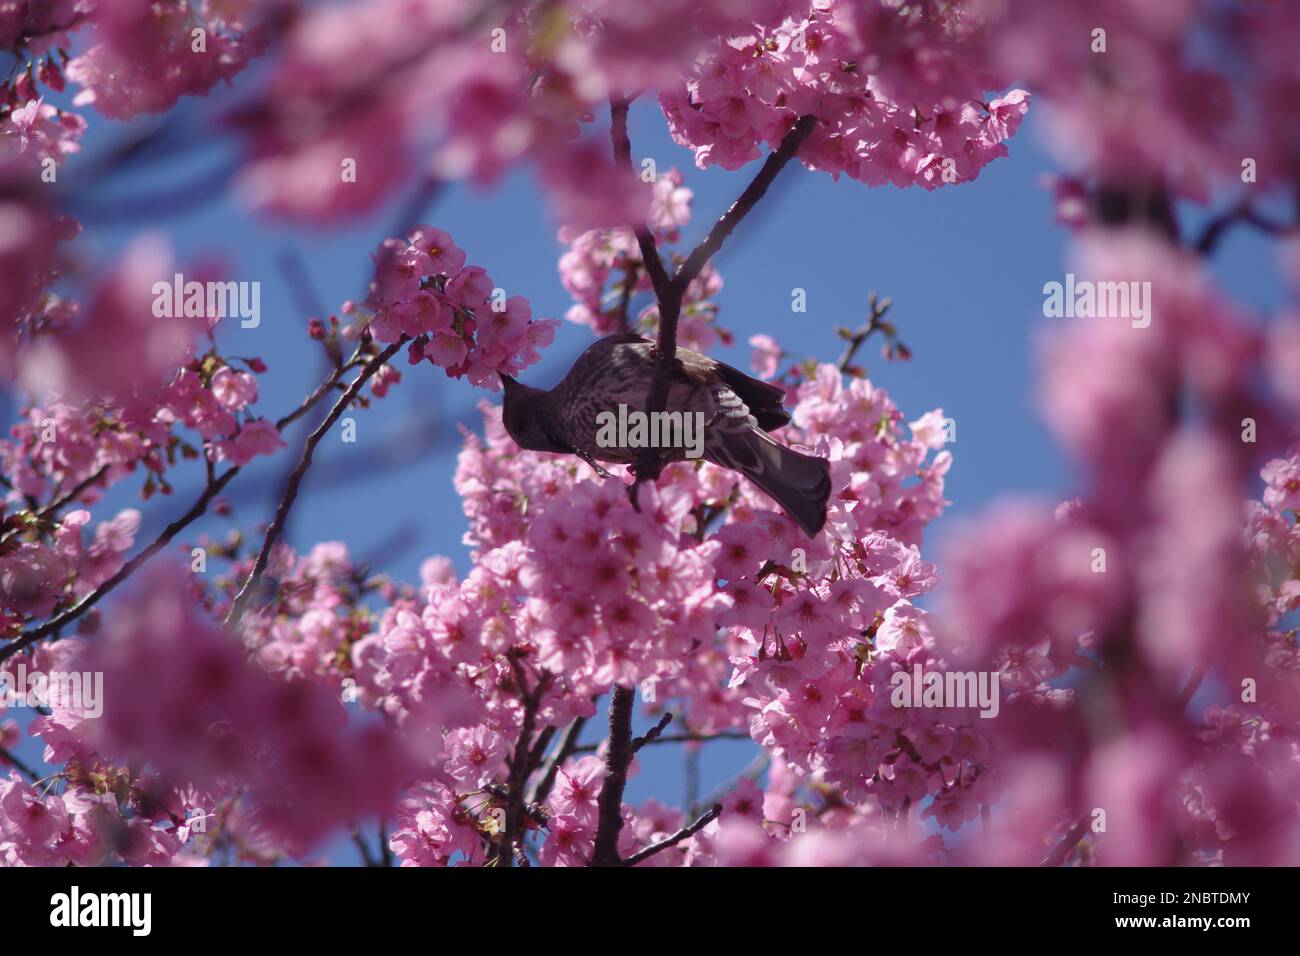 Bird and cherry blossom Stock Photo